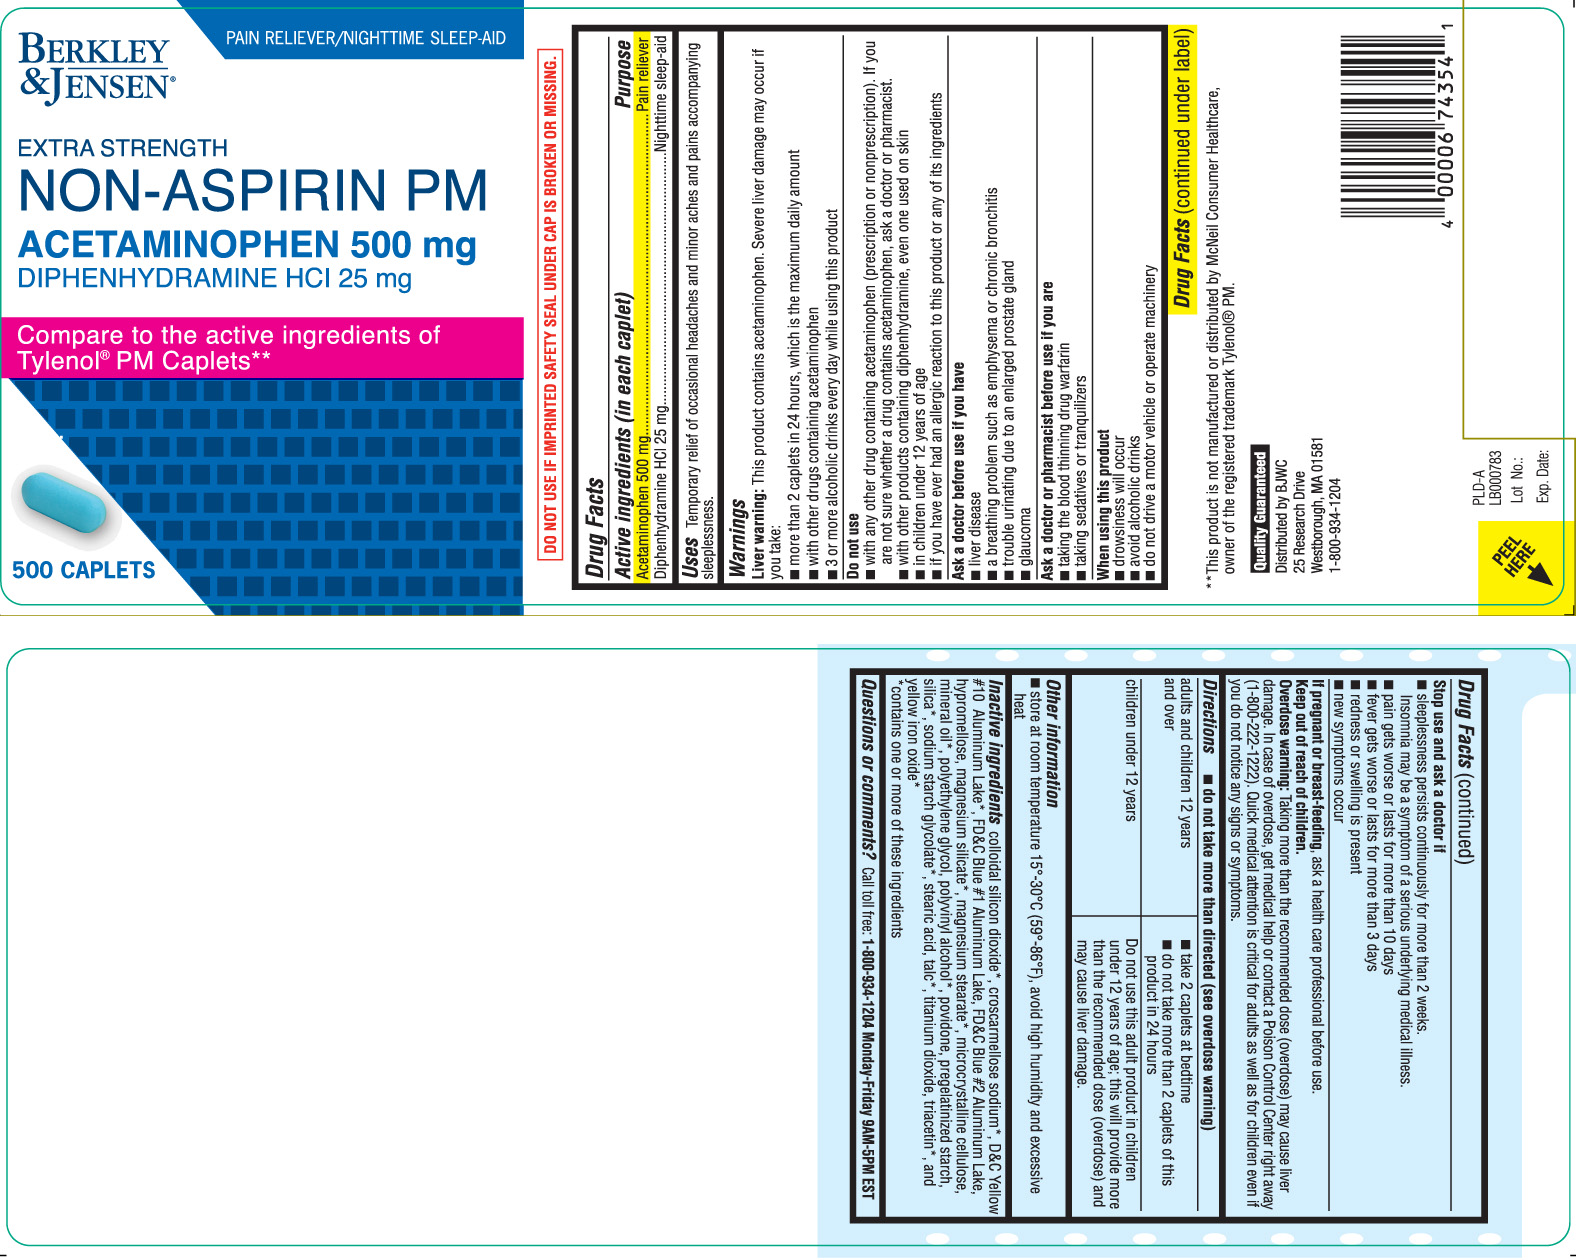 ACETAMINOPHEN 500 mg, DIPHENHYDRAMINE 25 mg